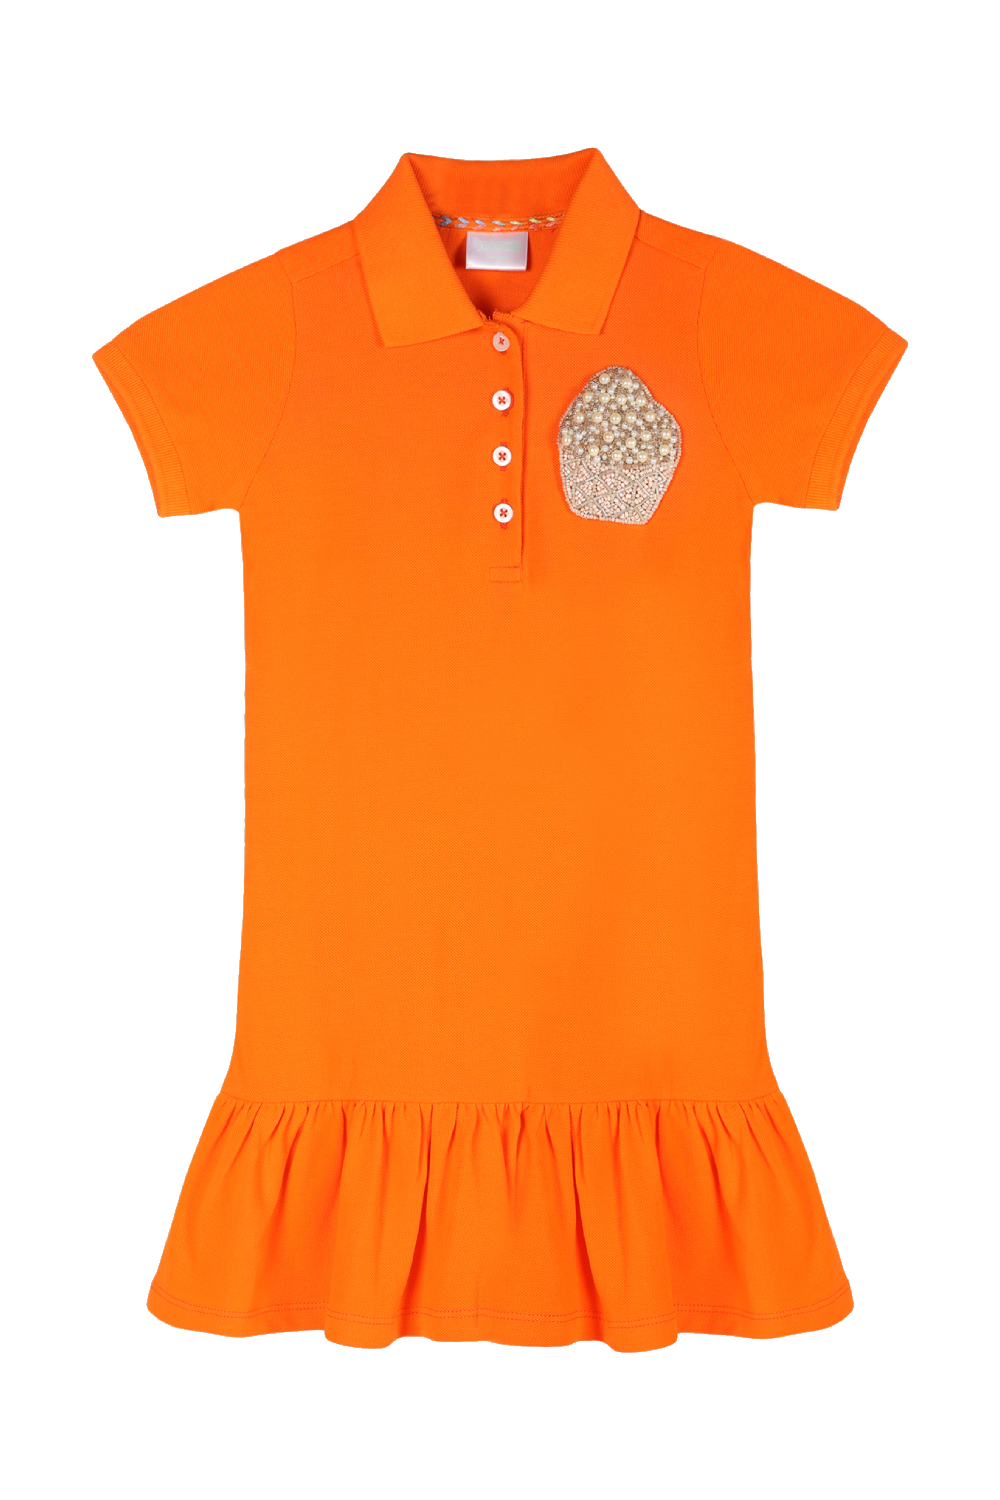 Girls Polo Orange Dress With Cupcake Motif